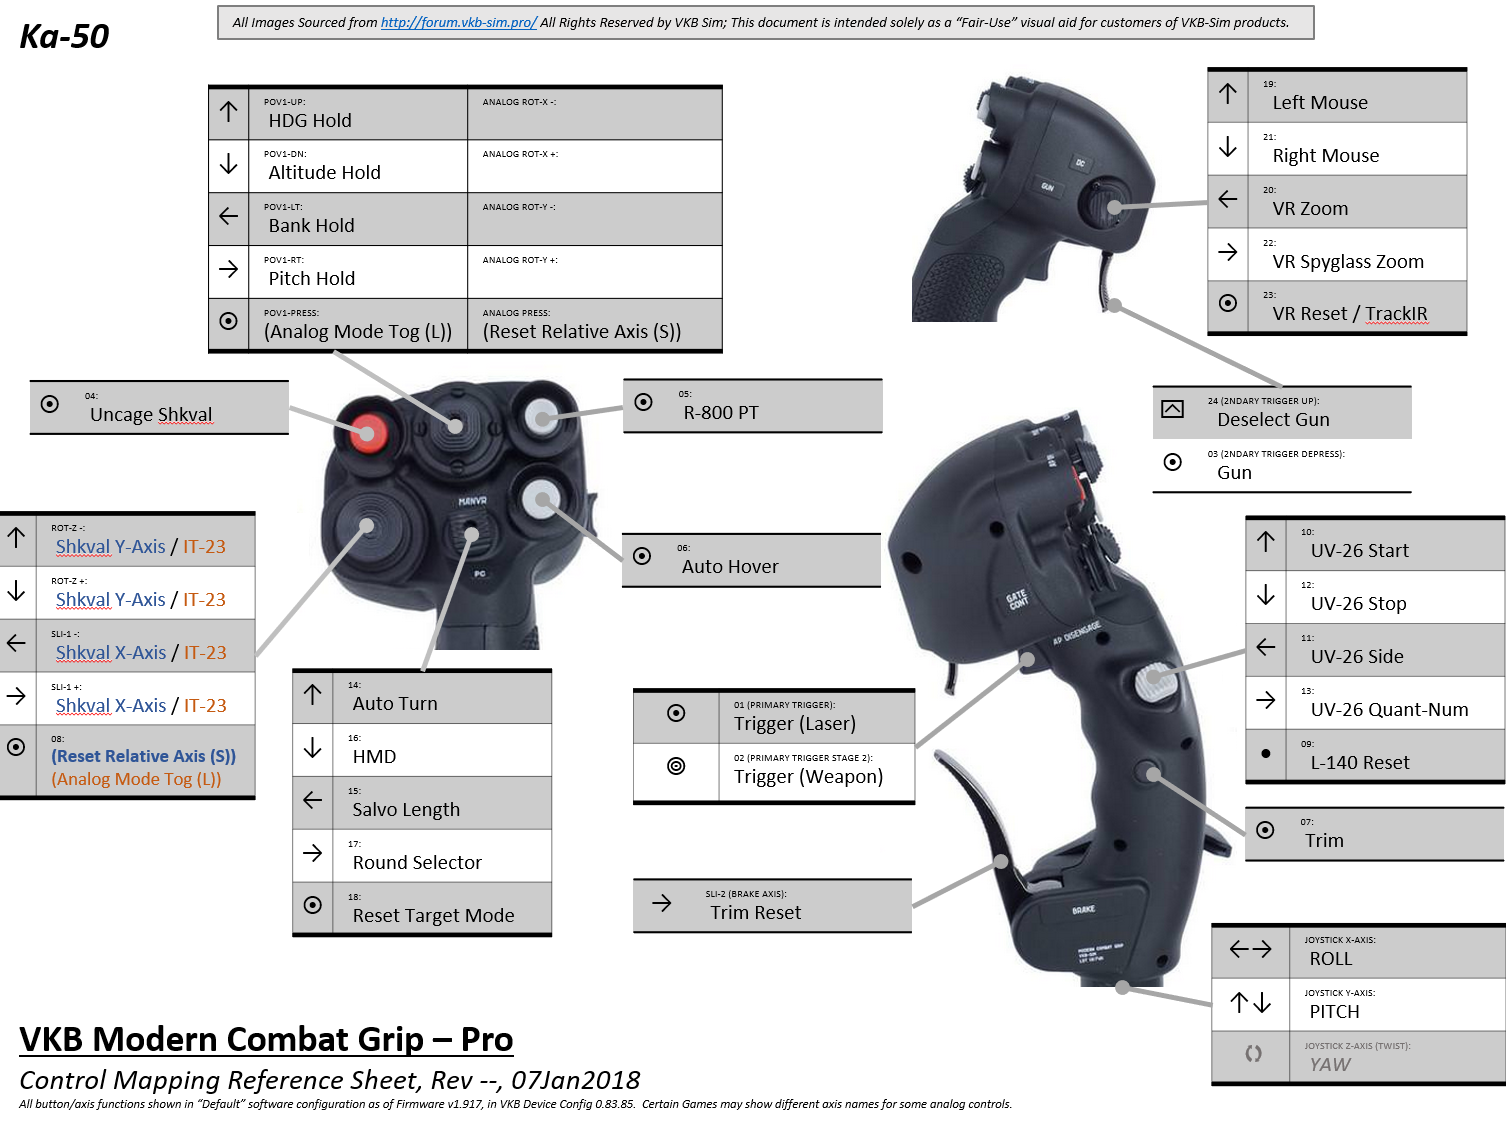 Profile VKB Modern Combat Grip Pro (MCG Pro), Warthog Throttle & K-51 Collective for Ka-50